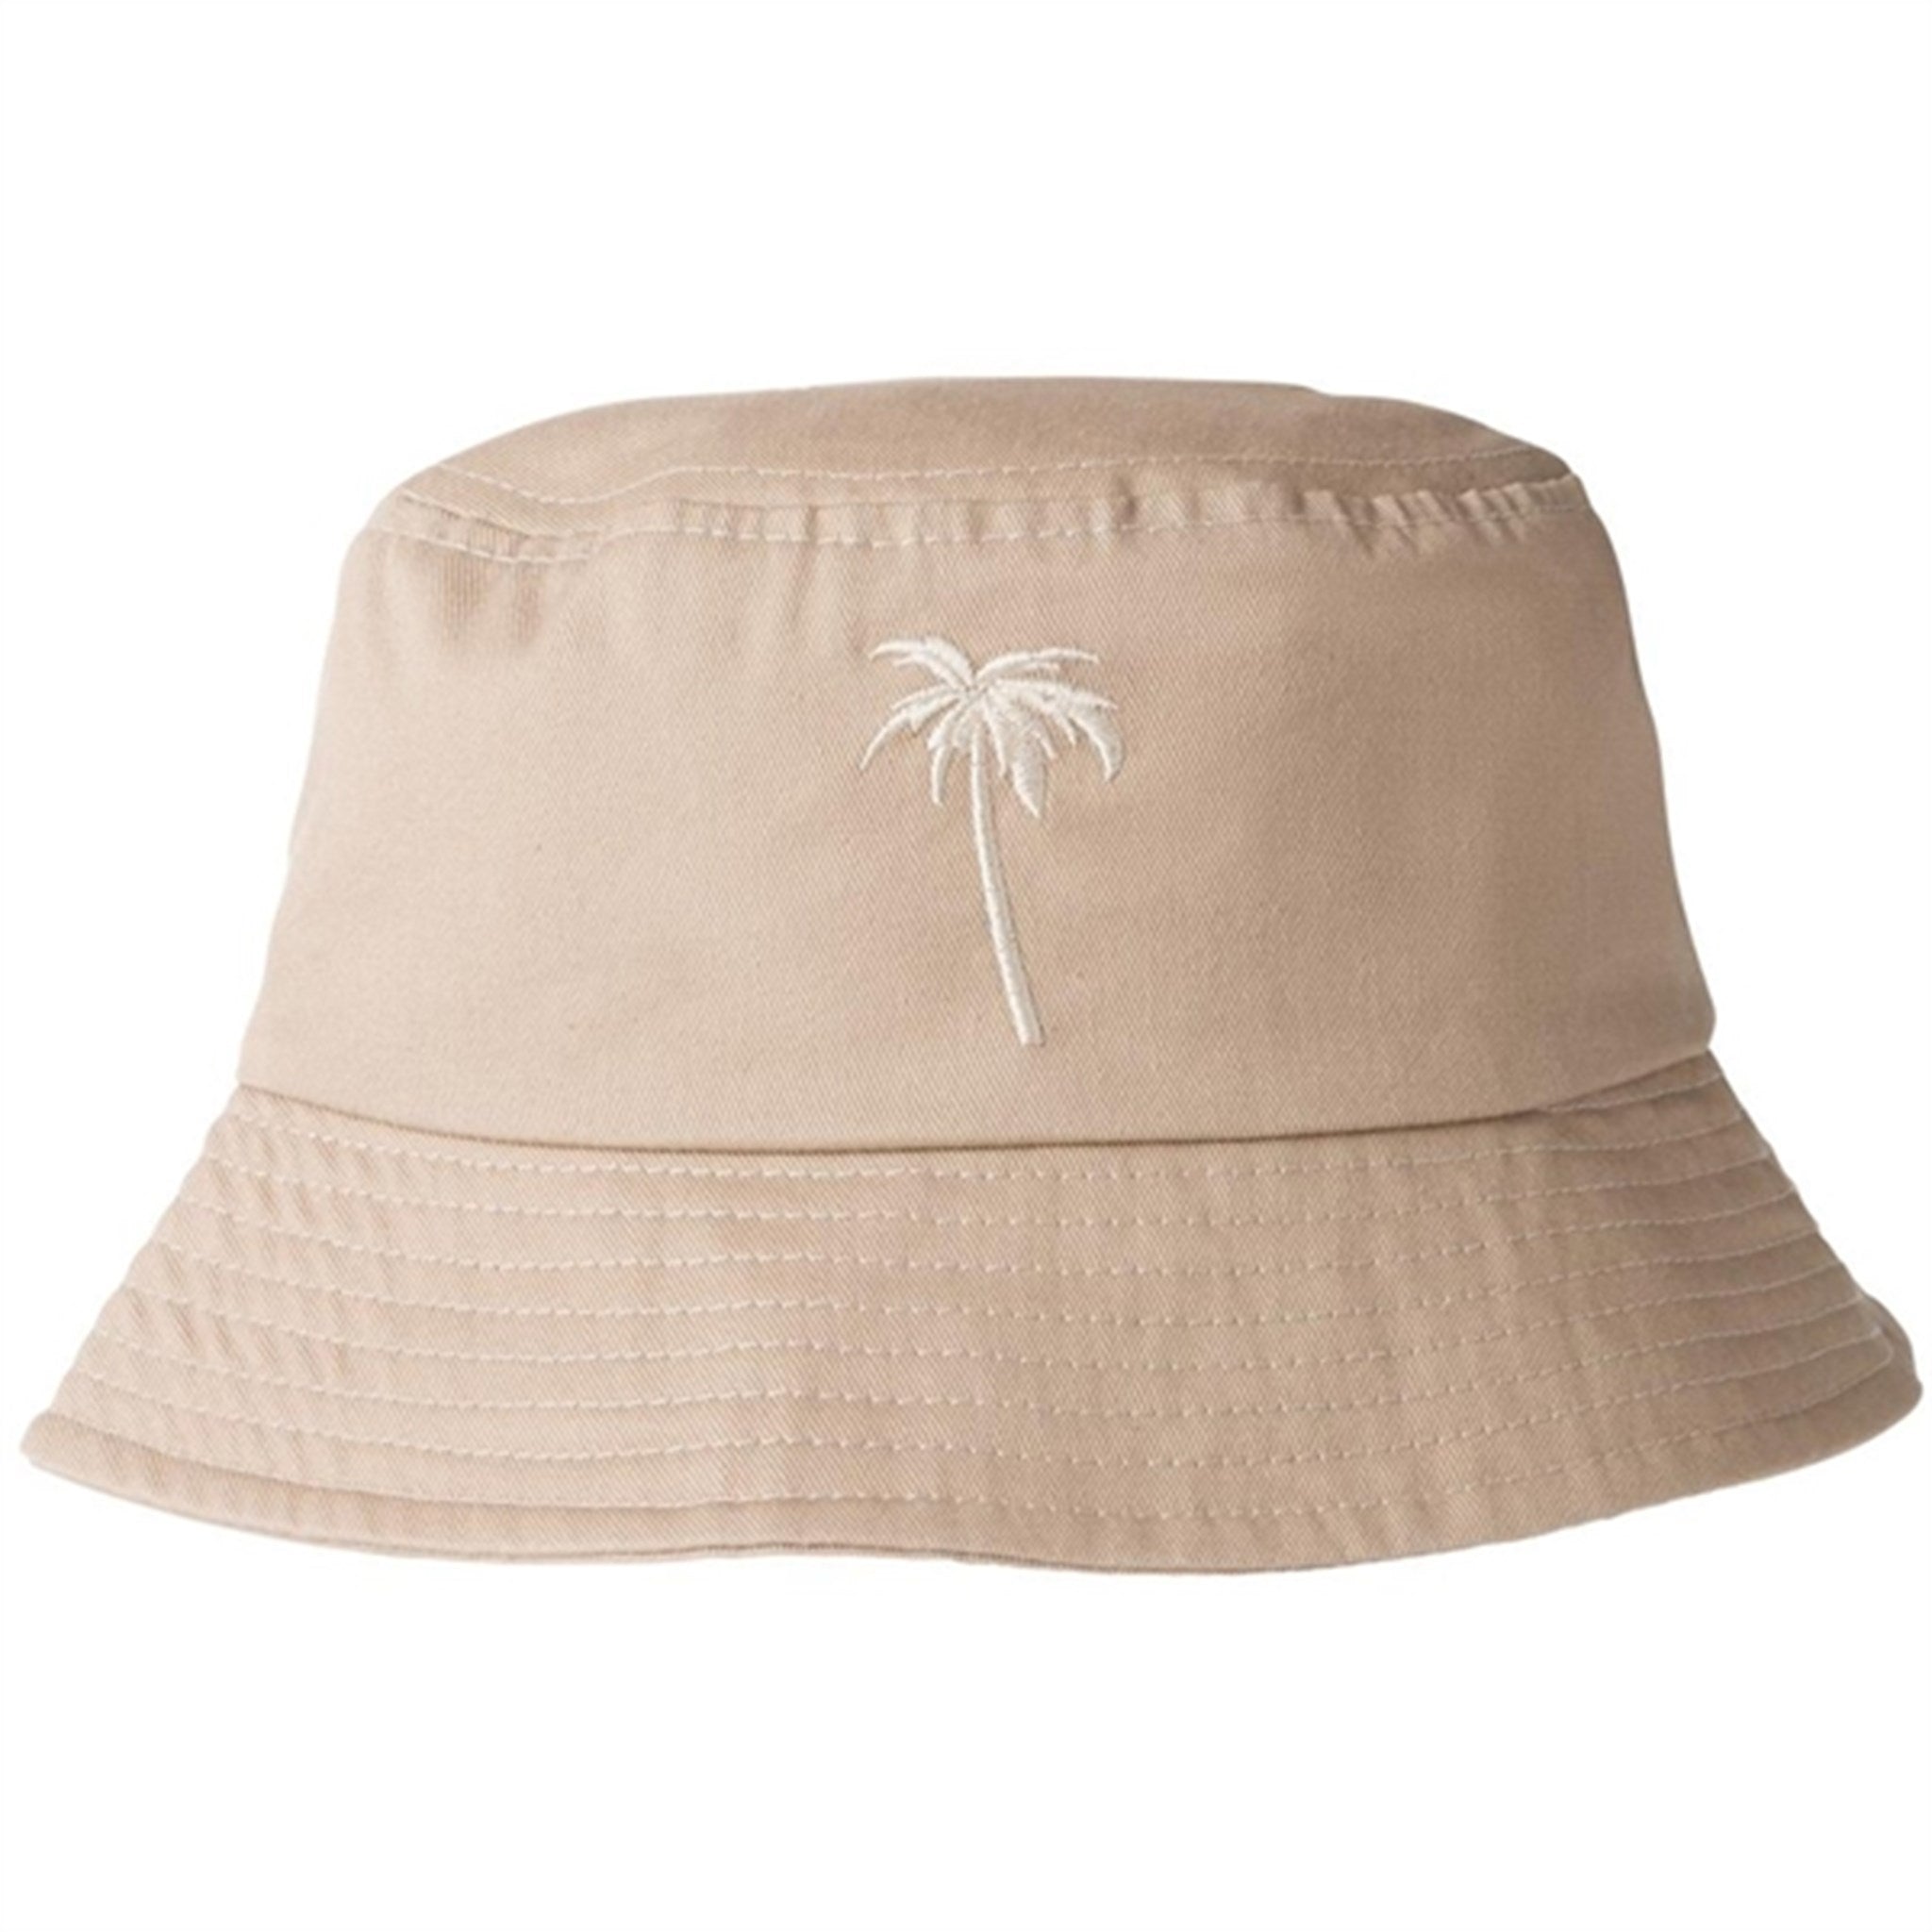 Name it Pure Cashmere Palm Nolo Bucket Hat